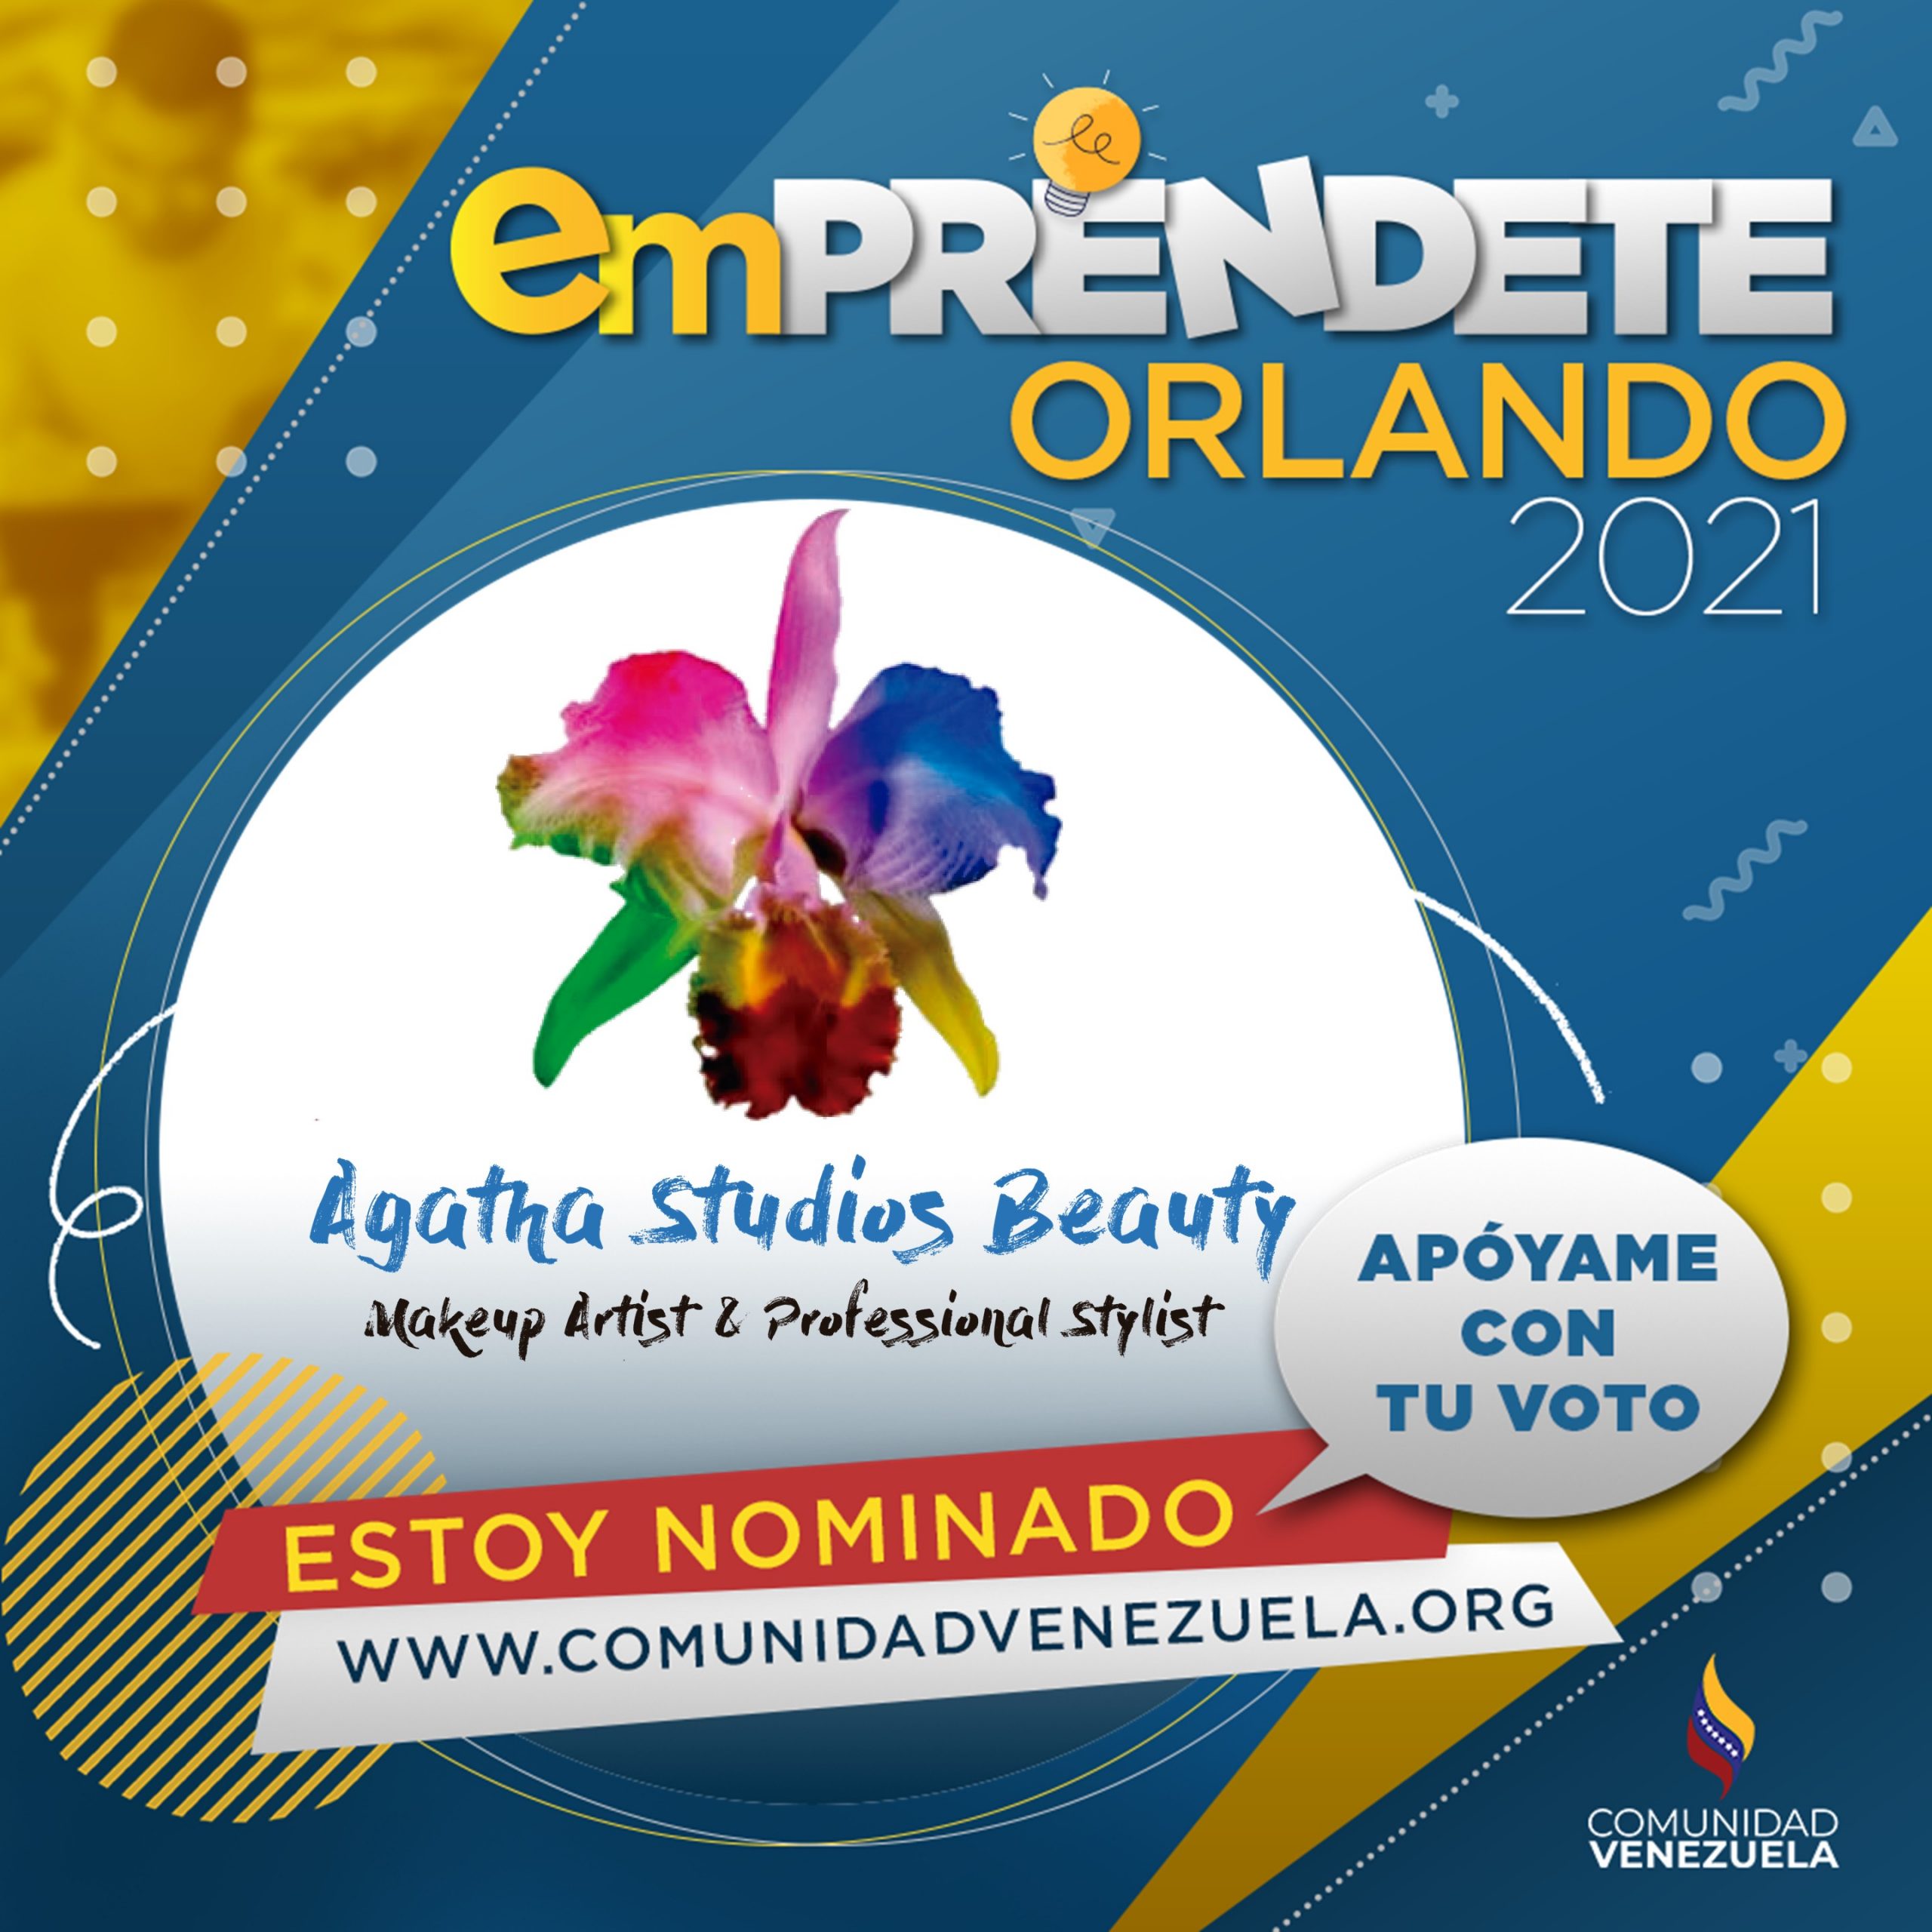 Vota por Agatha Studios Beauty